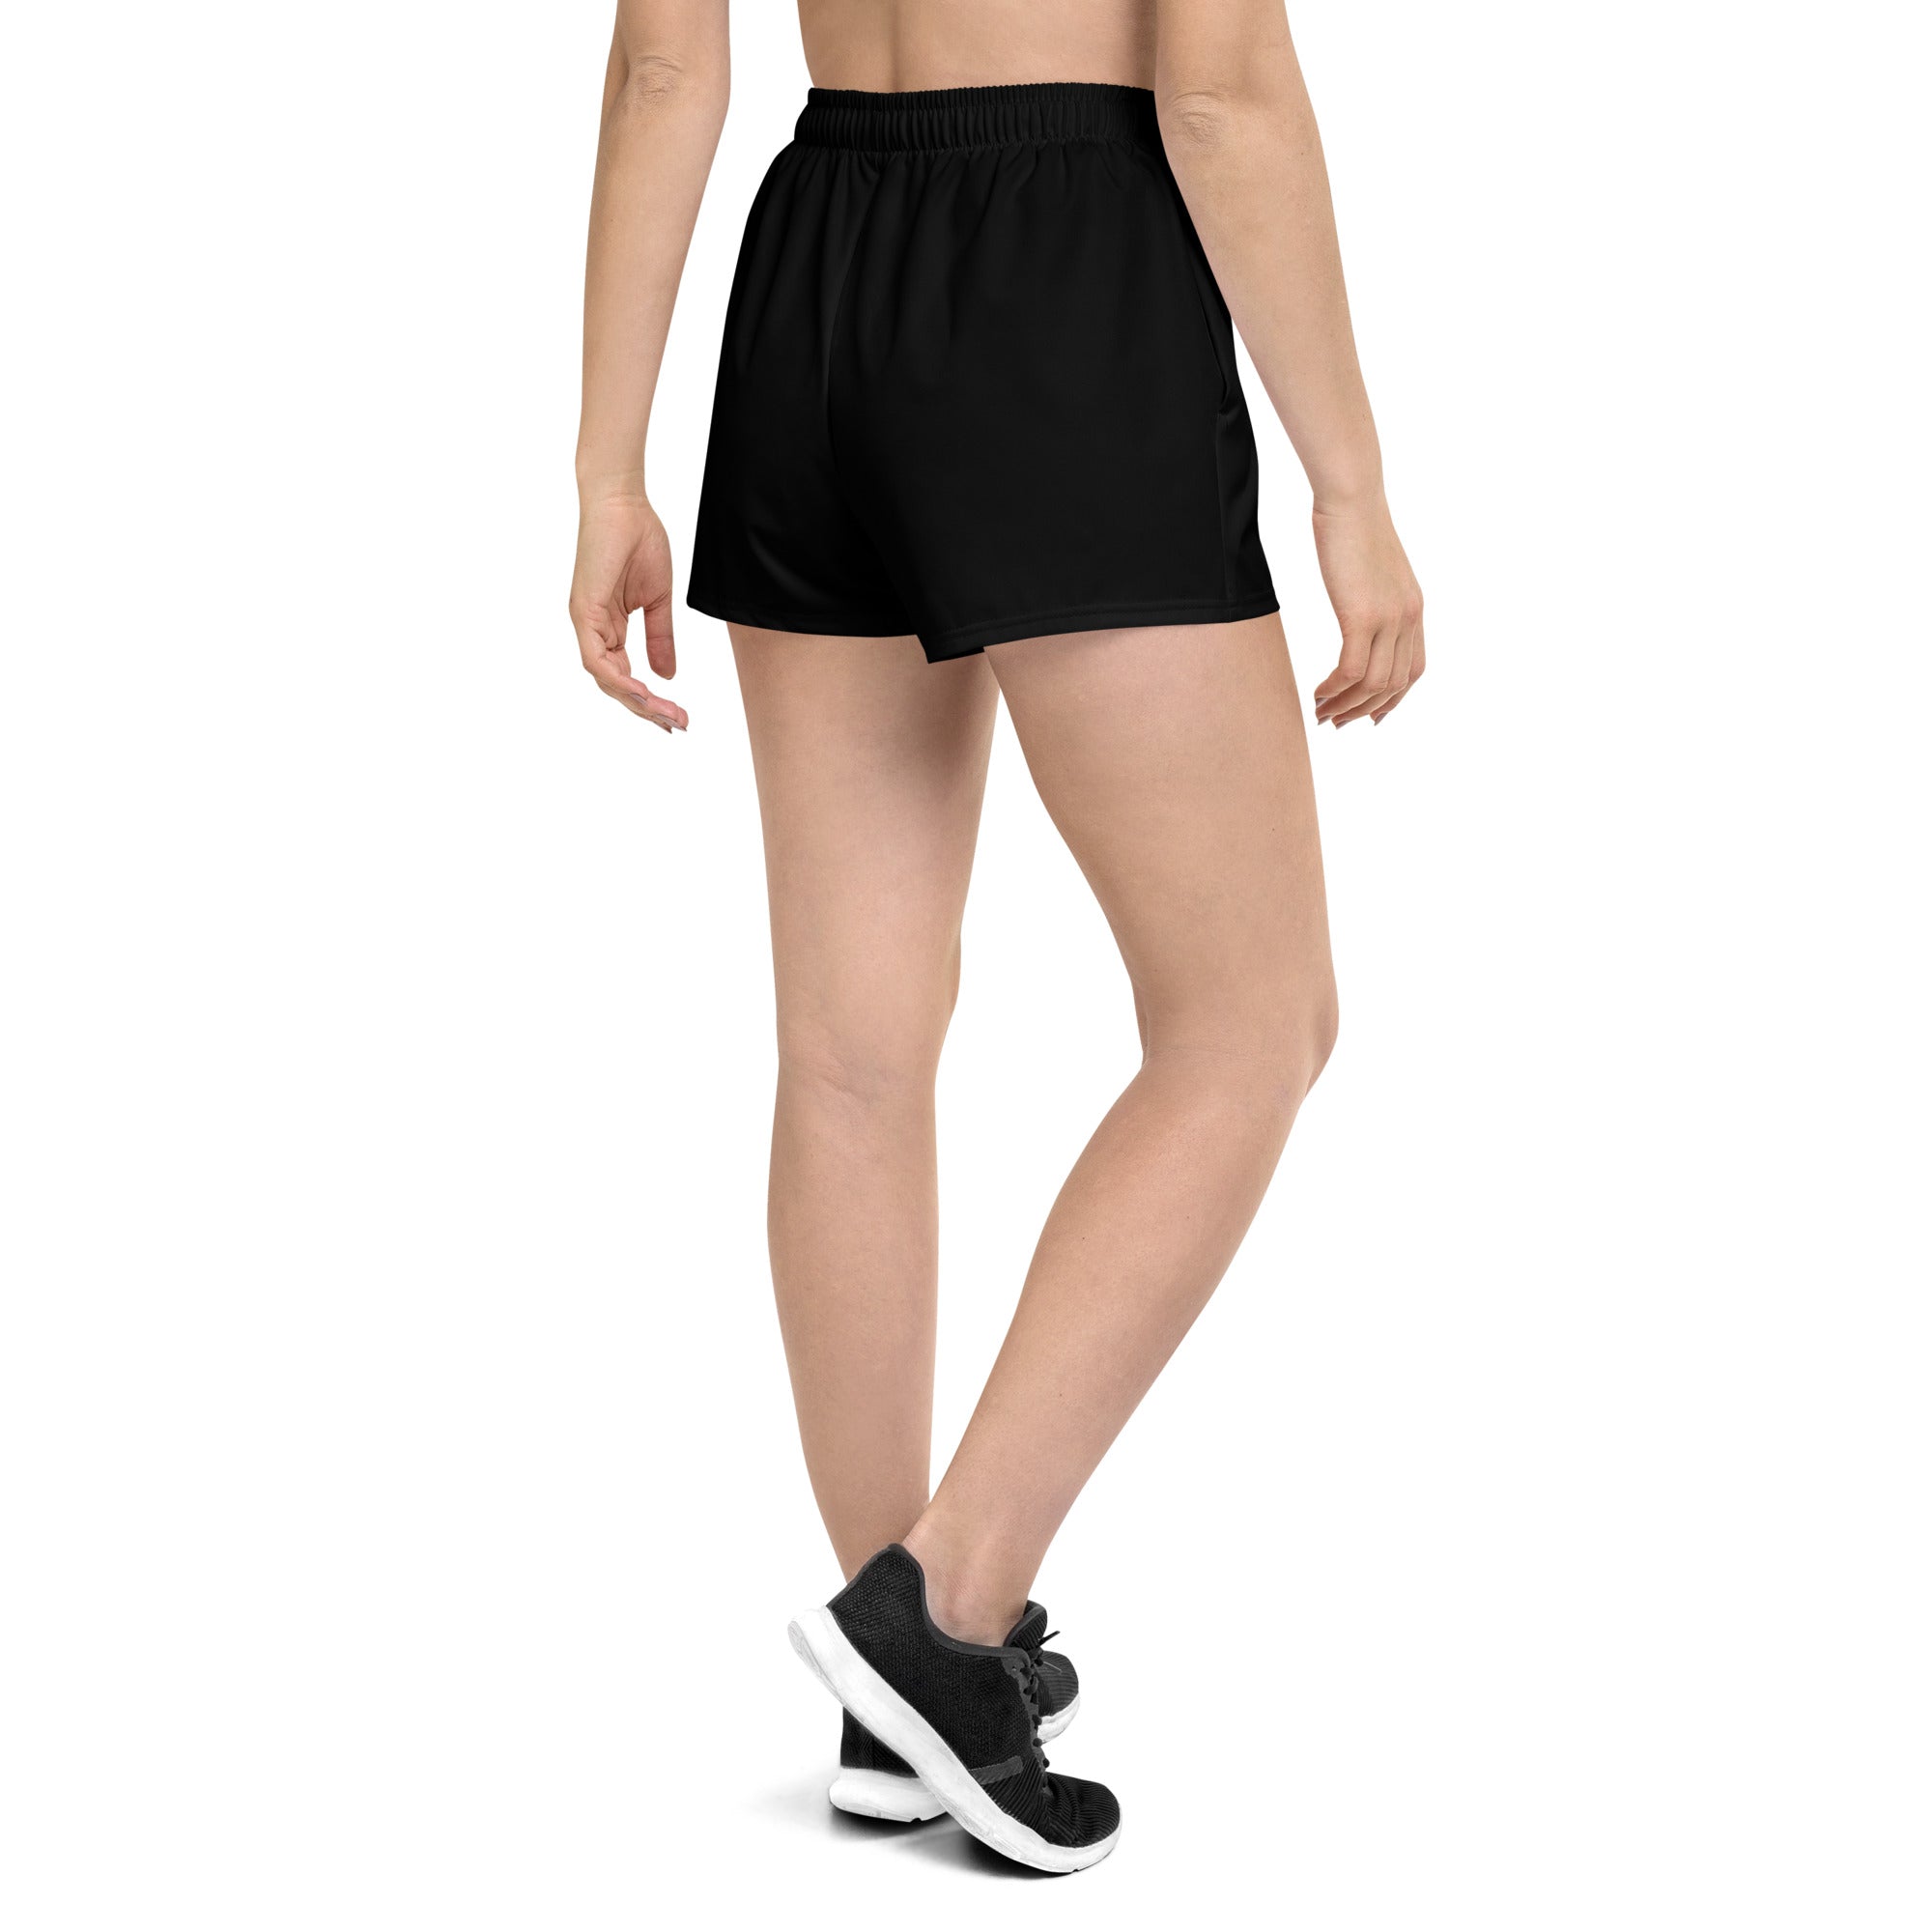 Olympus Women's Athletic Shorts White Text Logo